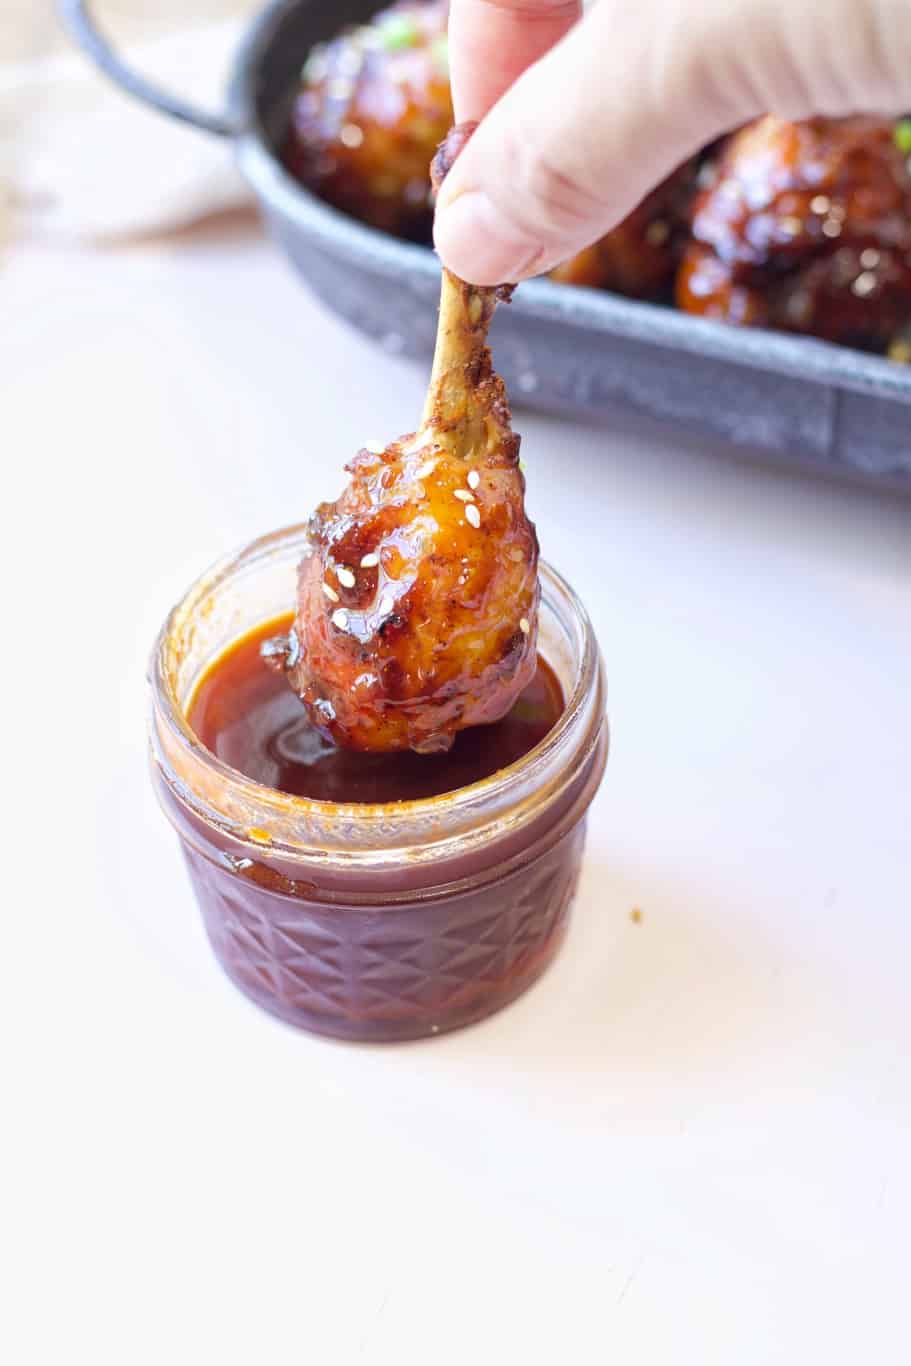 chicken drumstick dipped in honey sriracha sauce